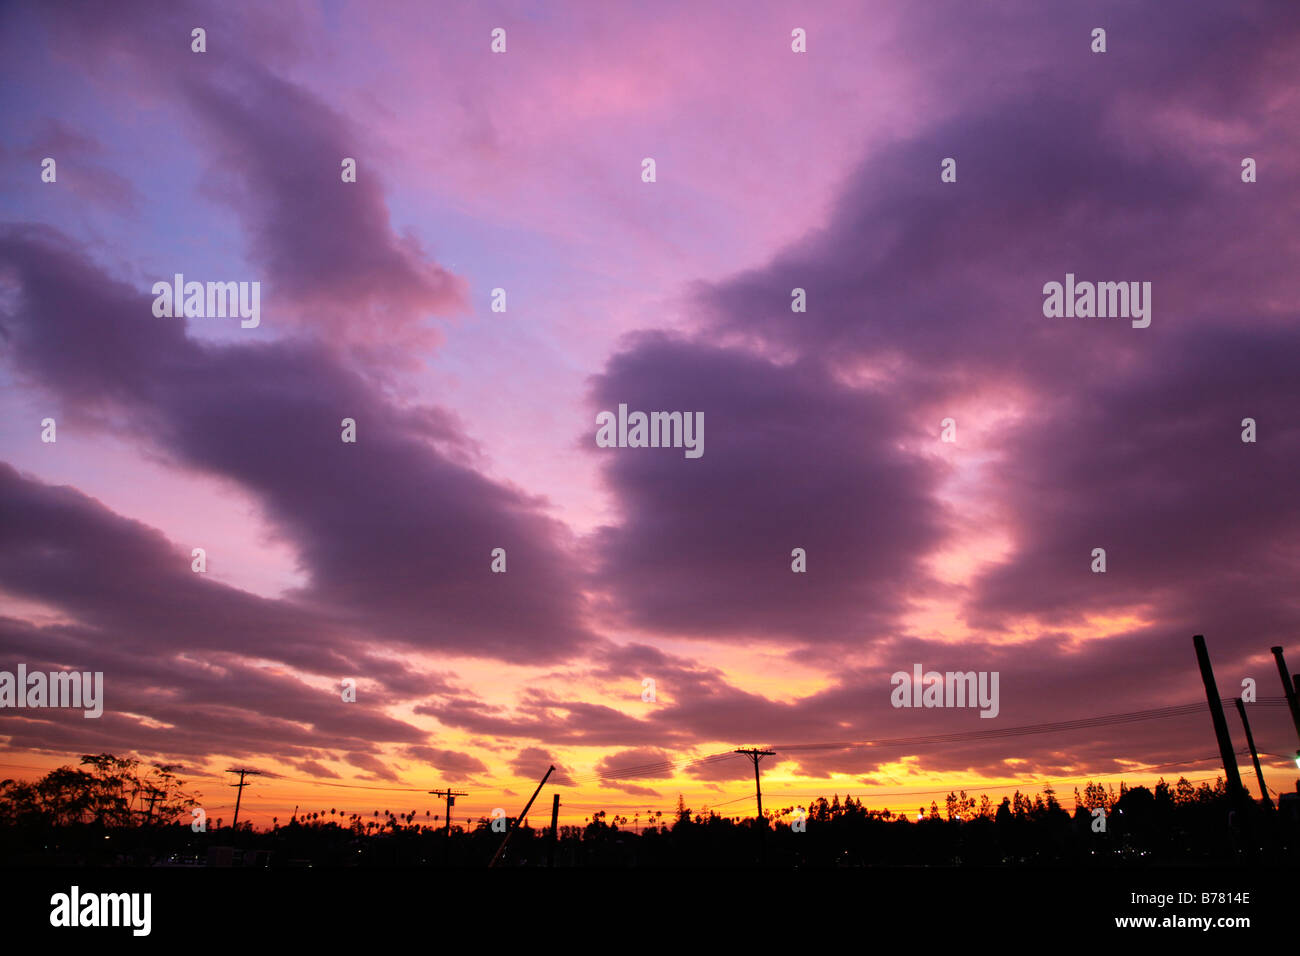 Tramonto nuvole viola pali telefonici silhouette big sky drammatico sky meteo Foto Stock